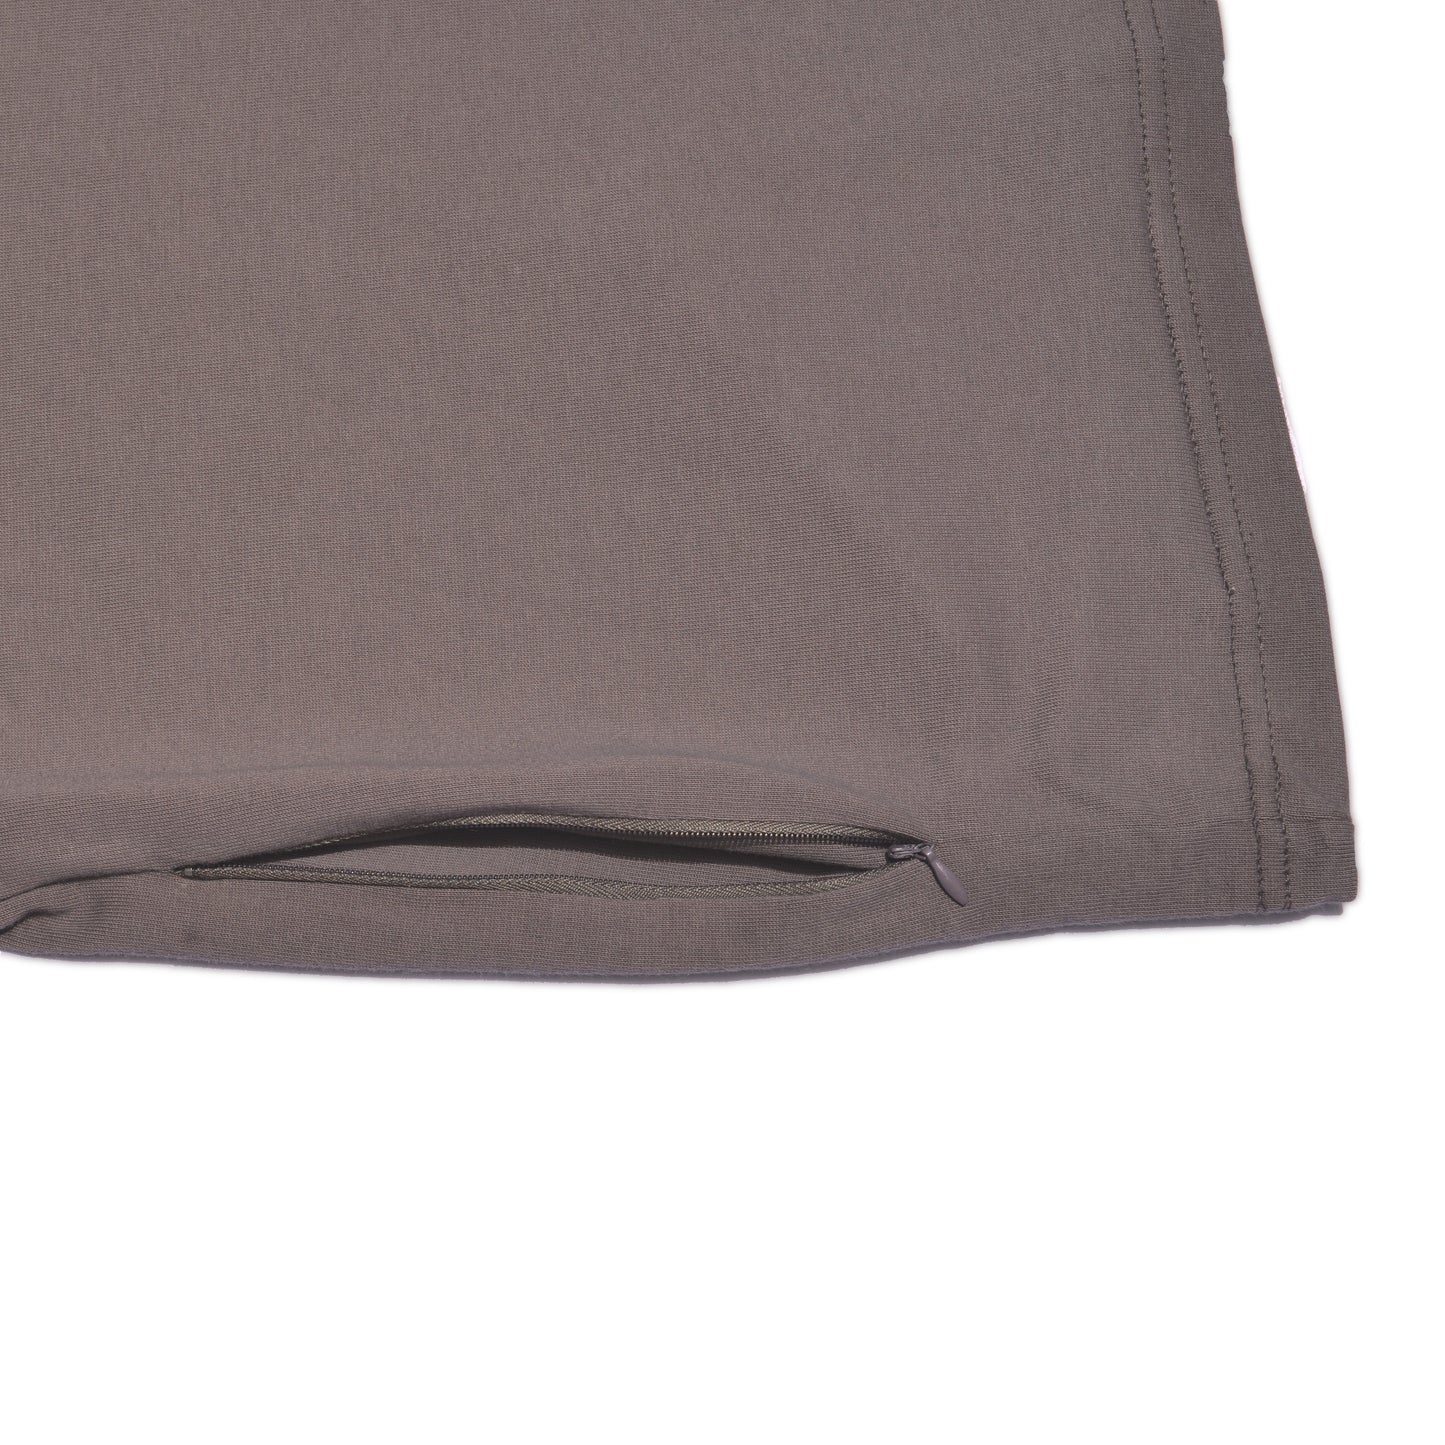 DS37 grey t-shirt secret pockets